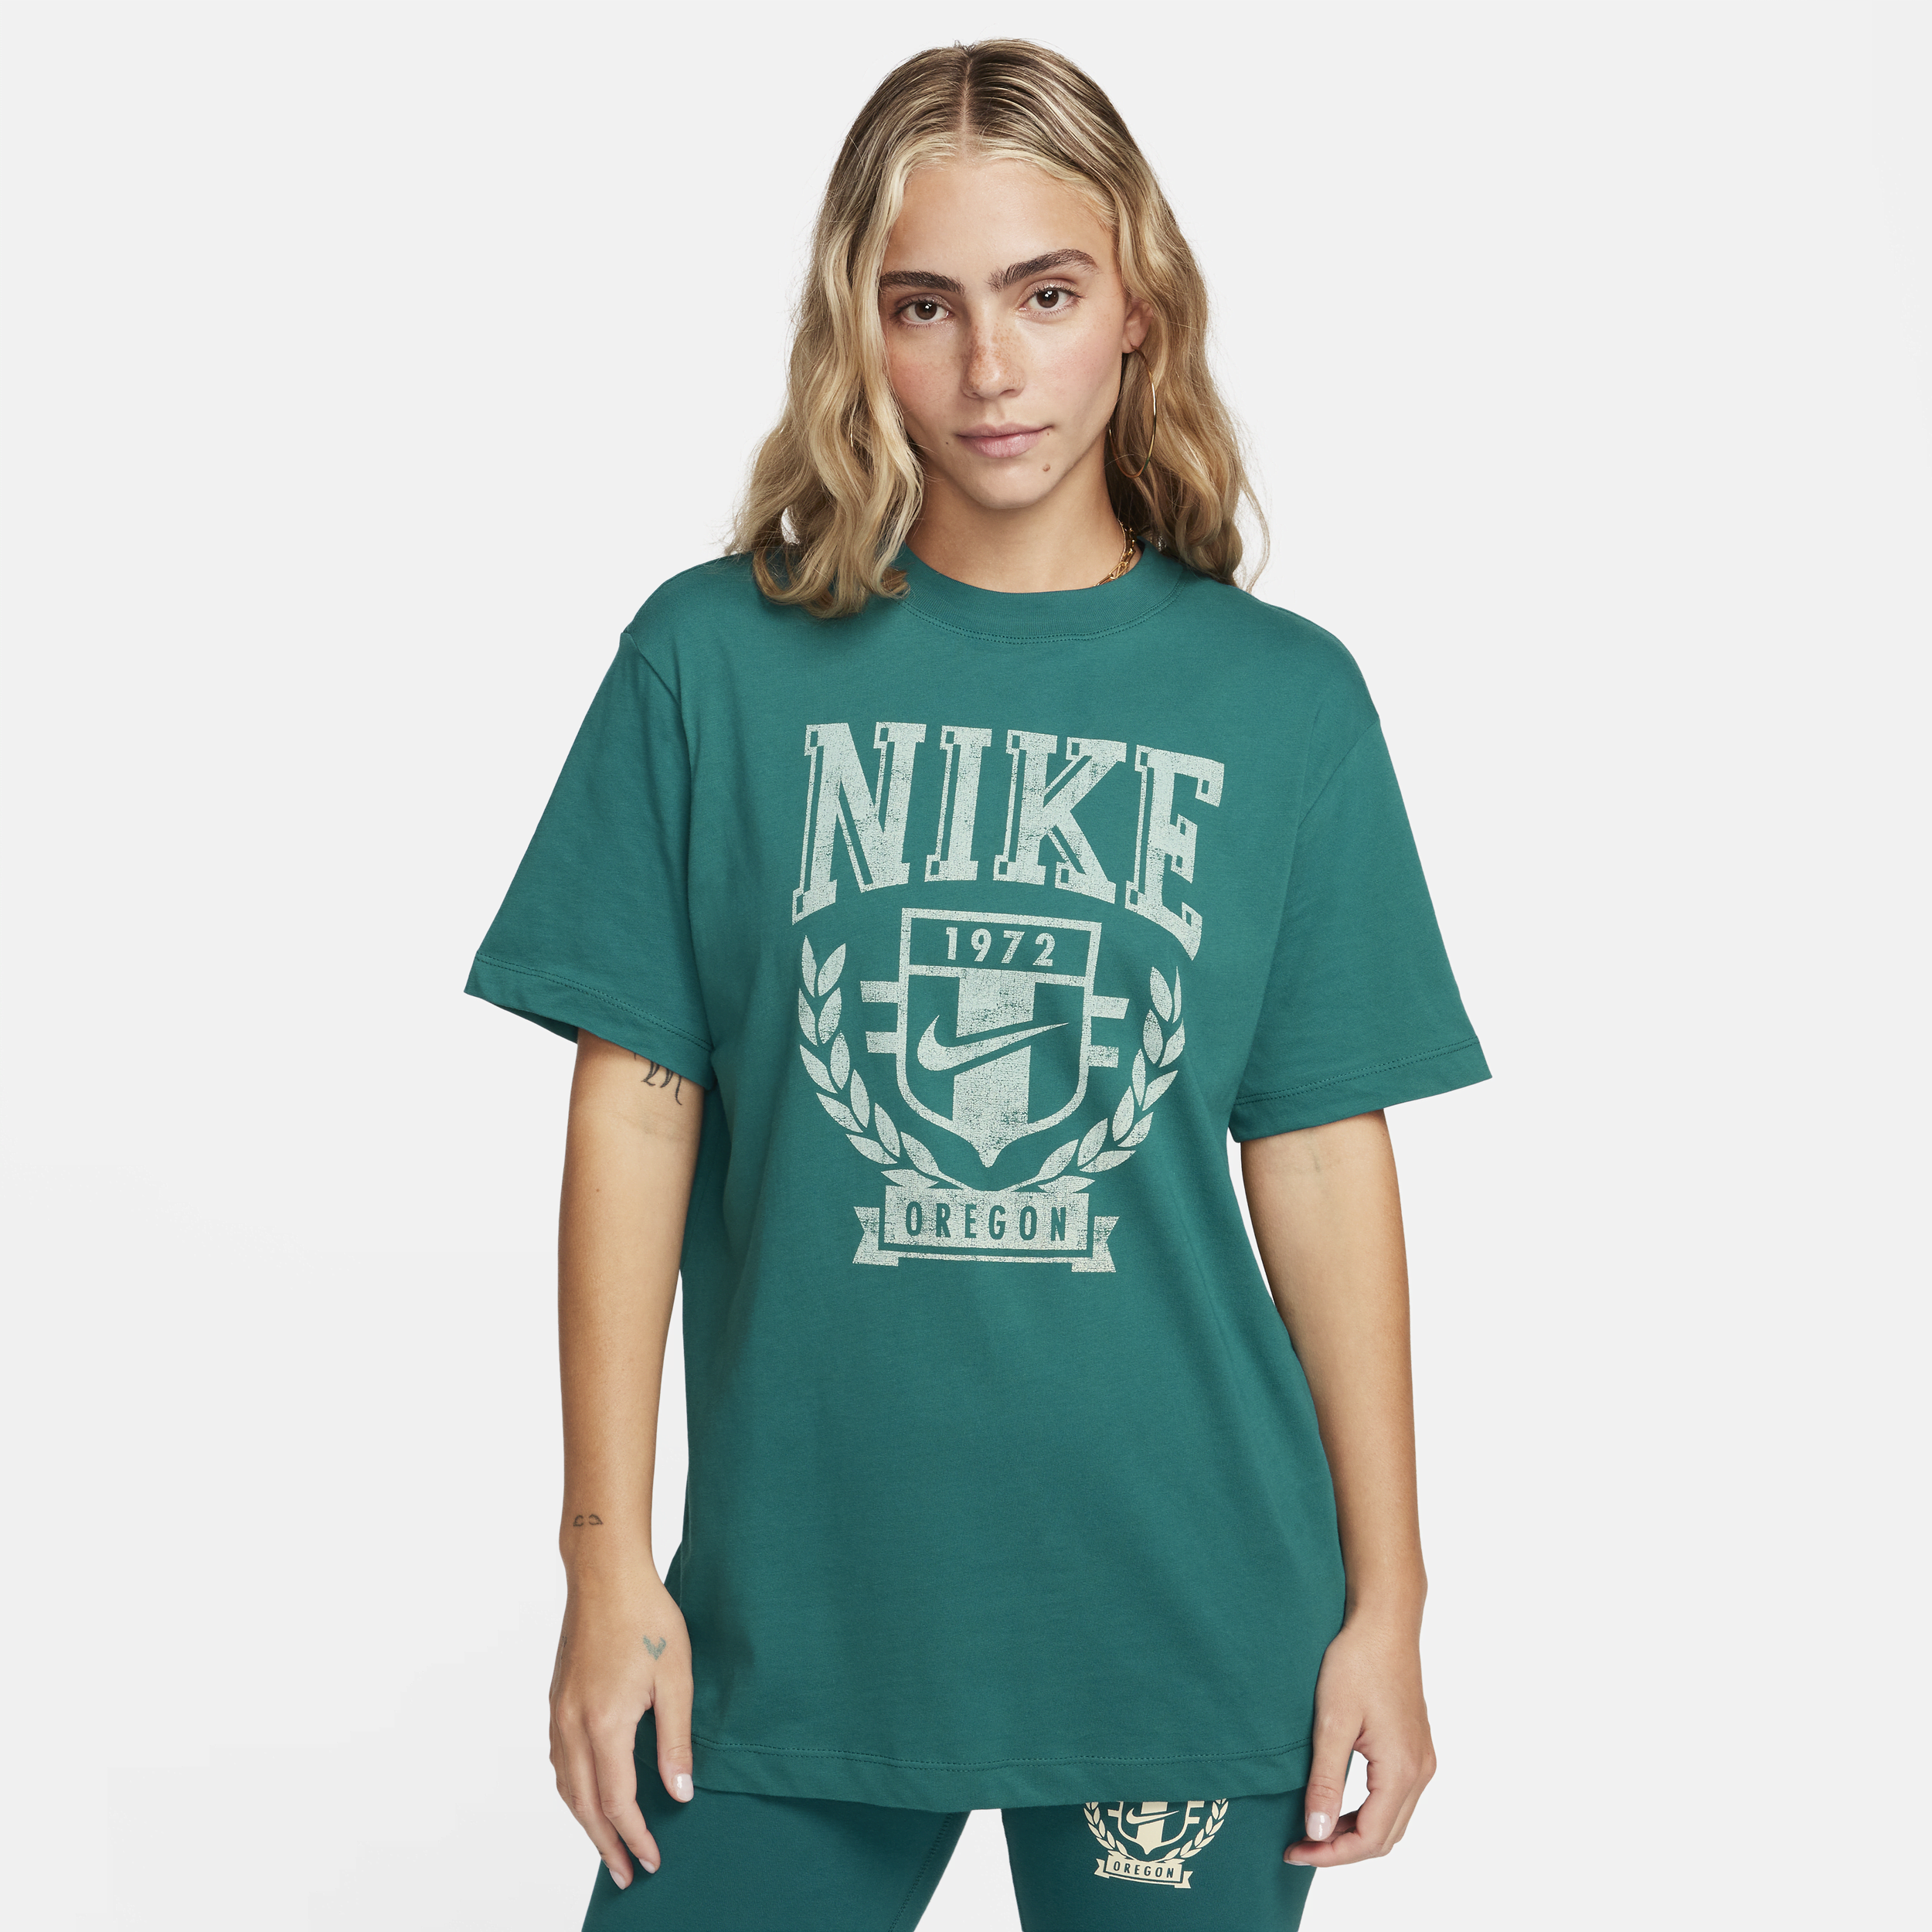 Nike Sportswear-T-shirt til kvinder - grøn